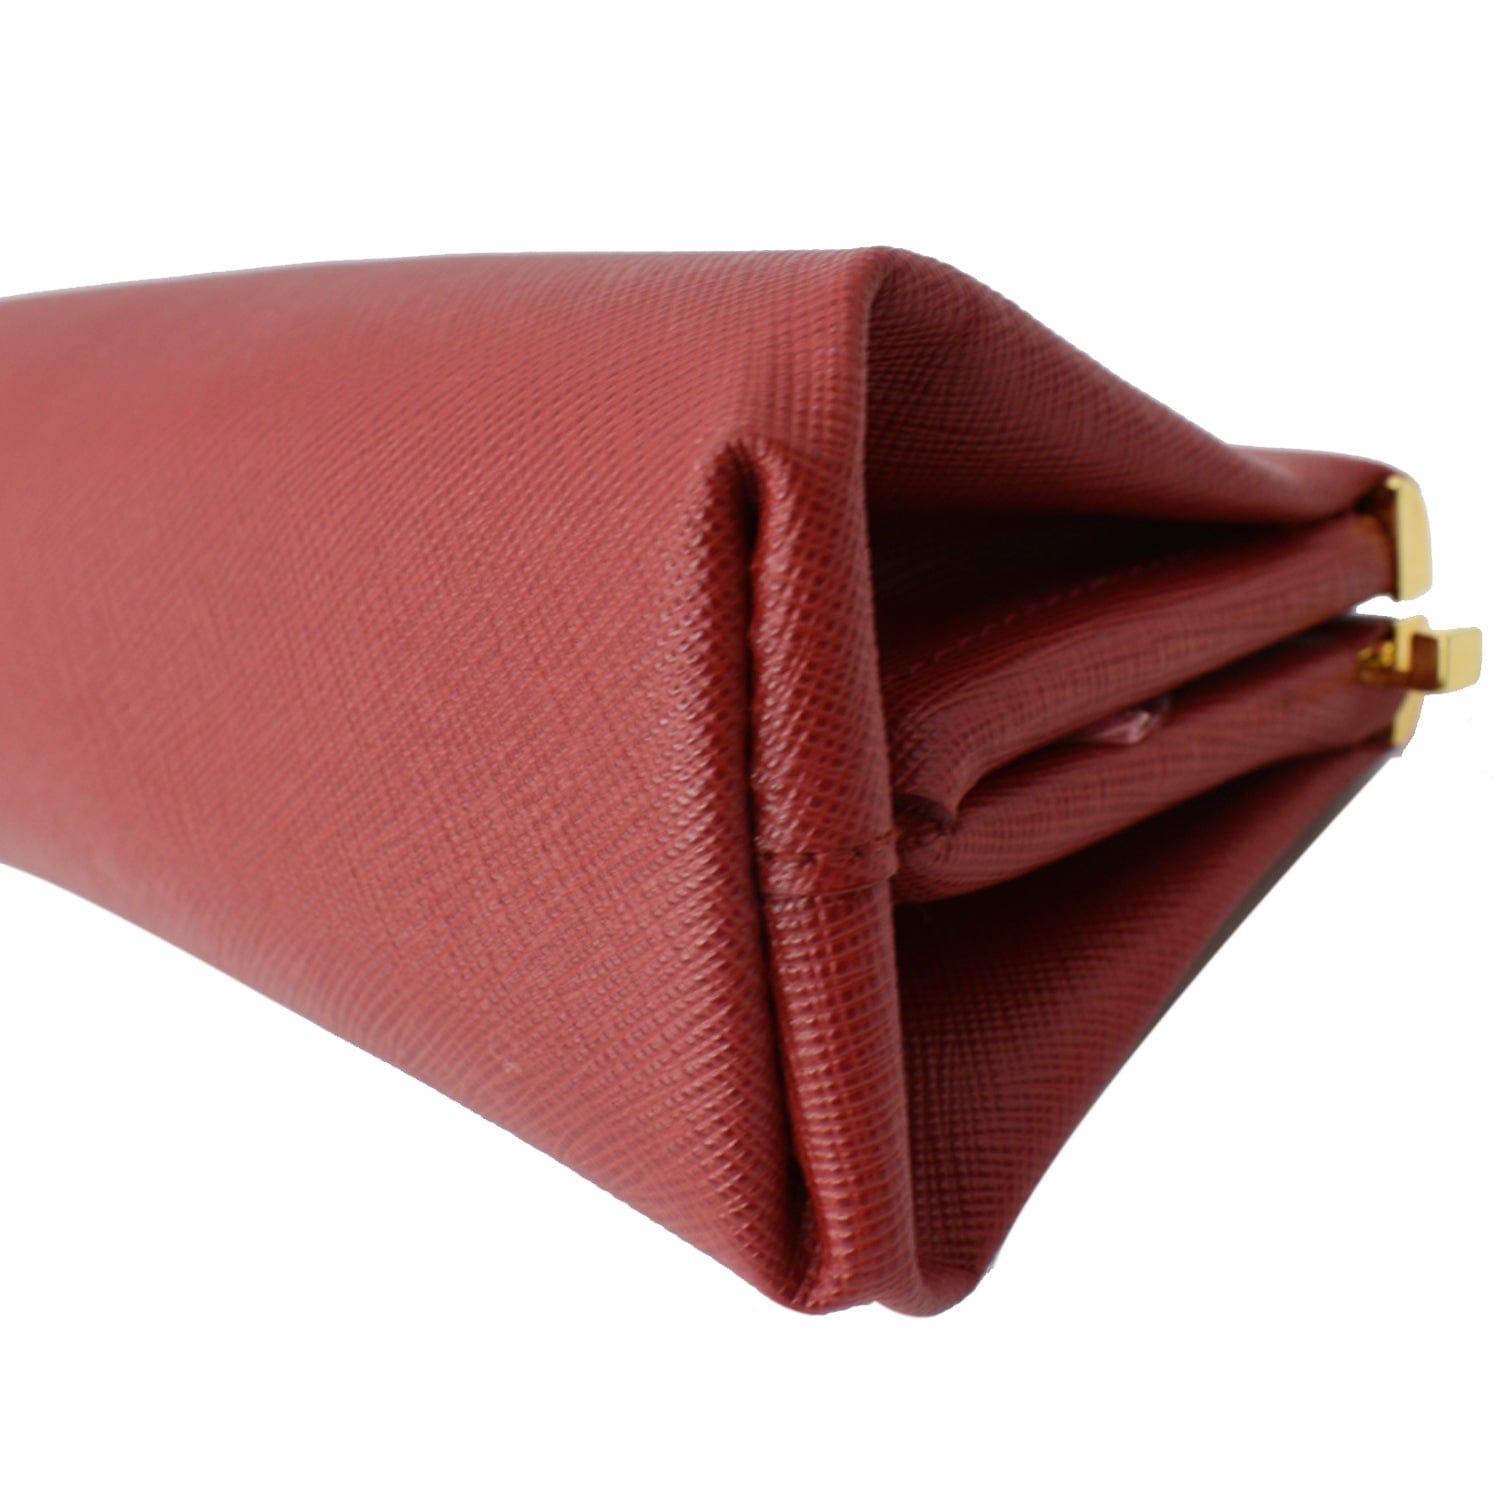 Prada East-West Frame Saffiano Leather Clutch Bag Red